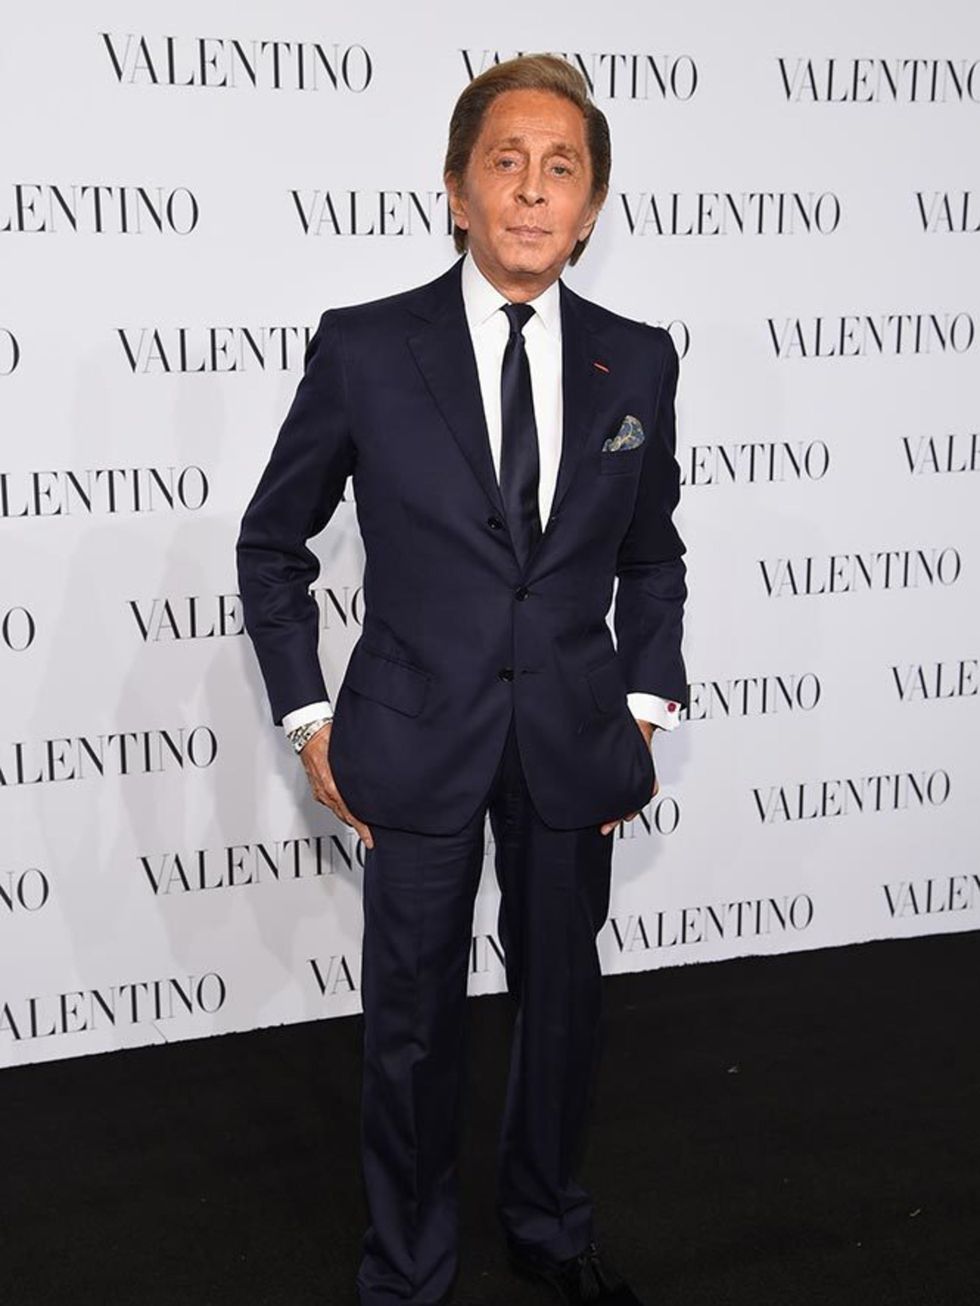 Valentino Garavani at the Valentino Sala Bianca 945 Event in New York, December 2014.